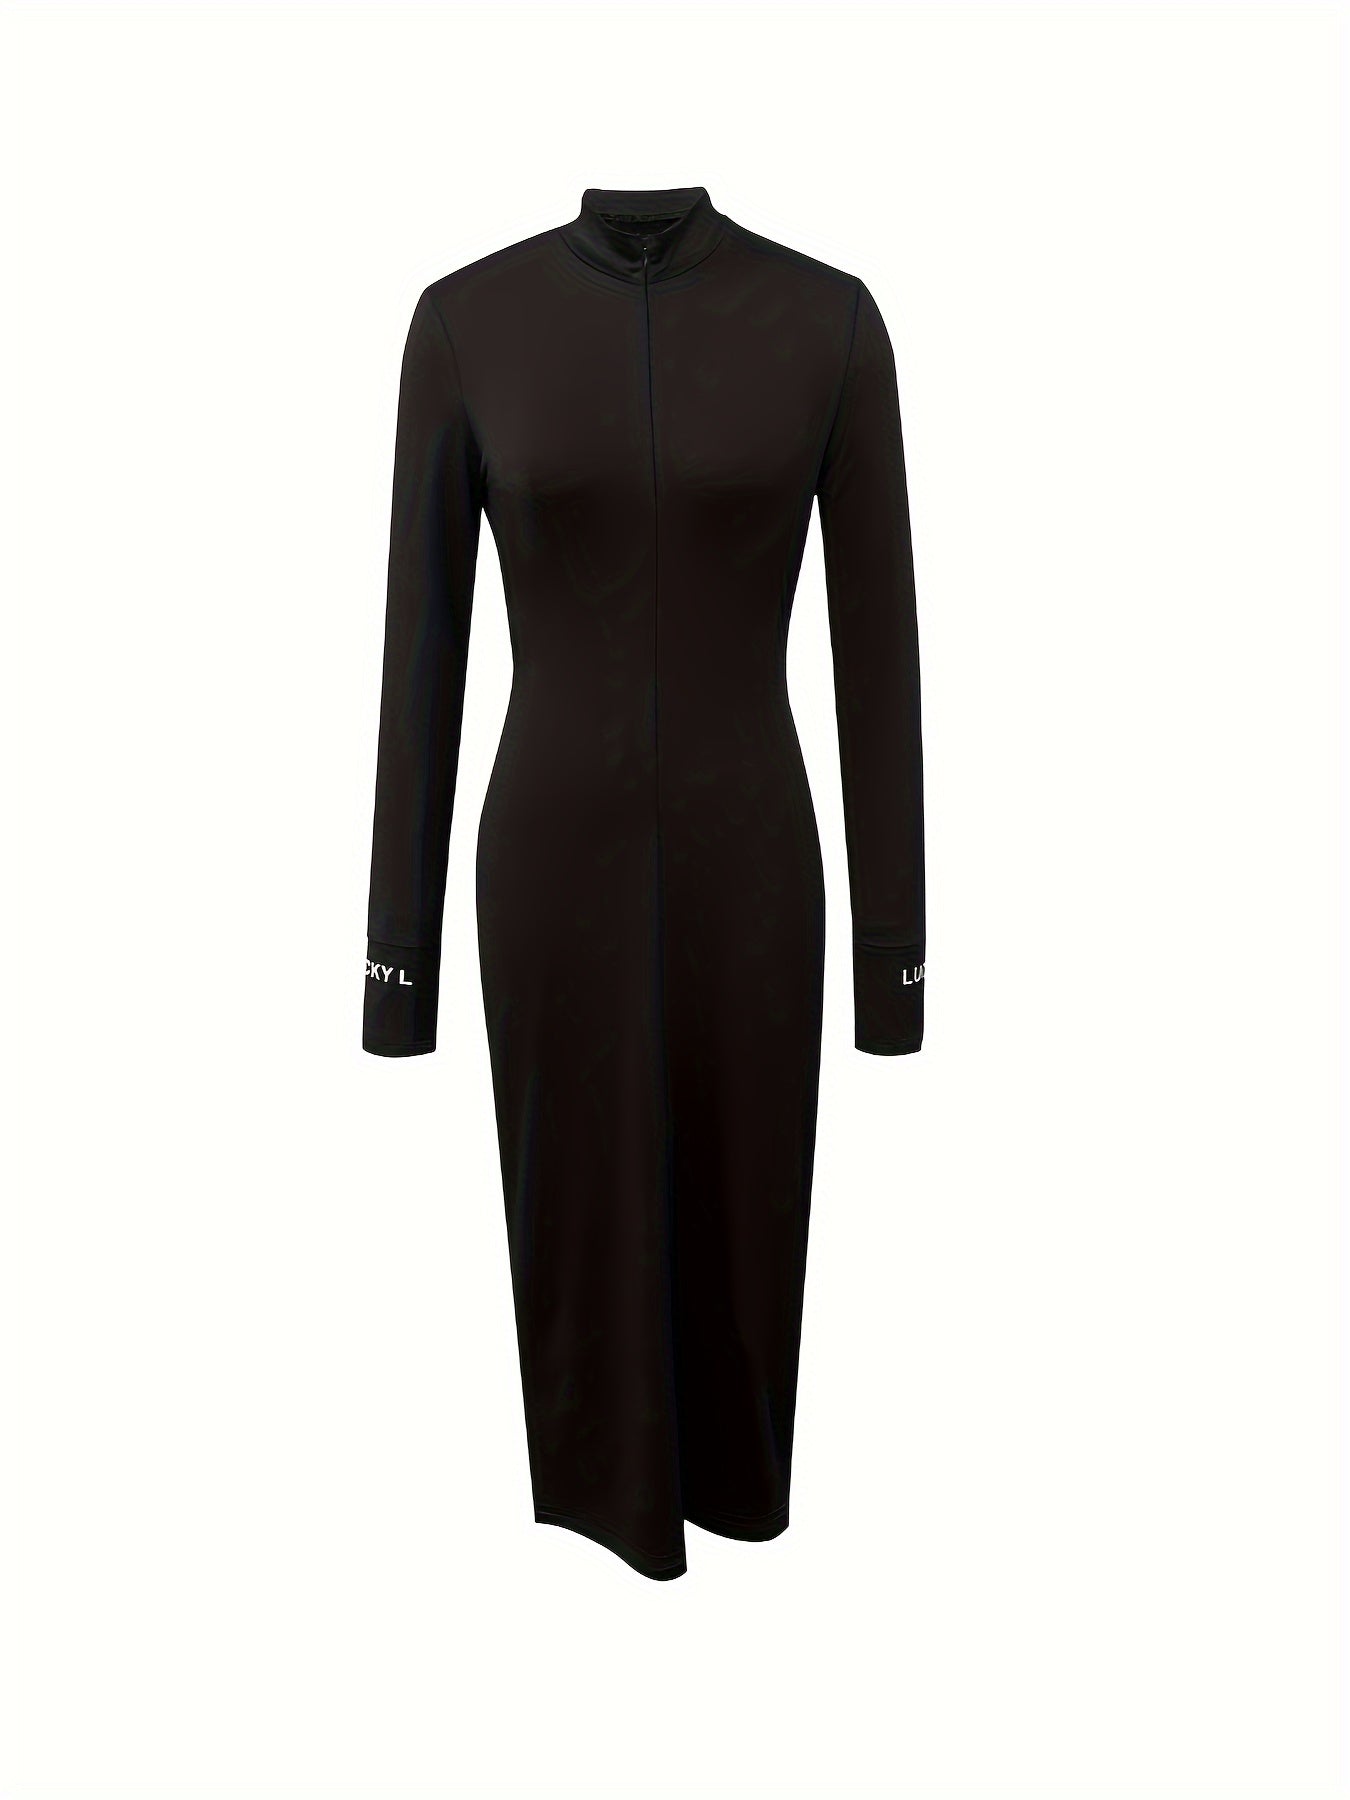 Antmvs Letter Pattern Bodycon Dress, Elegant Long Sleeve Midi Dress, Women's Clothing